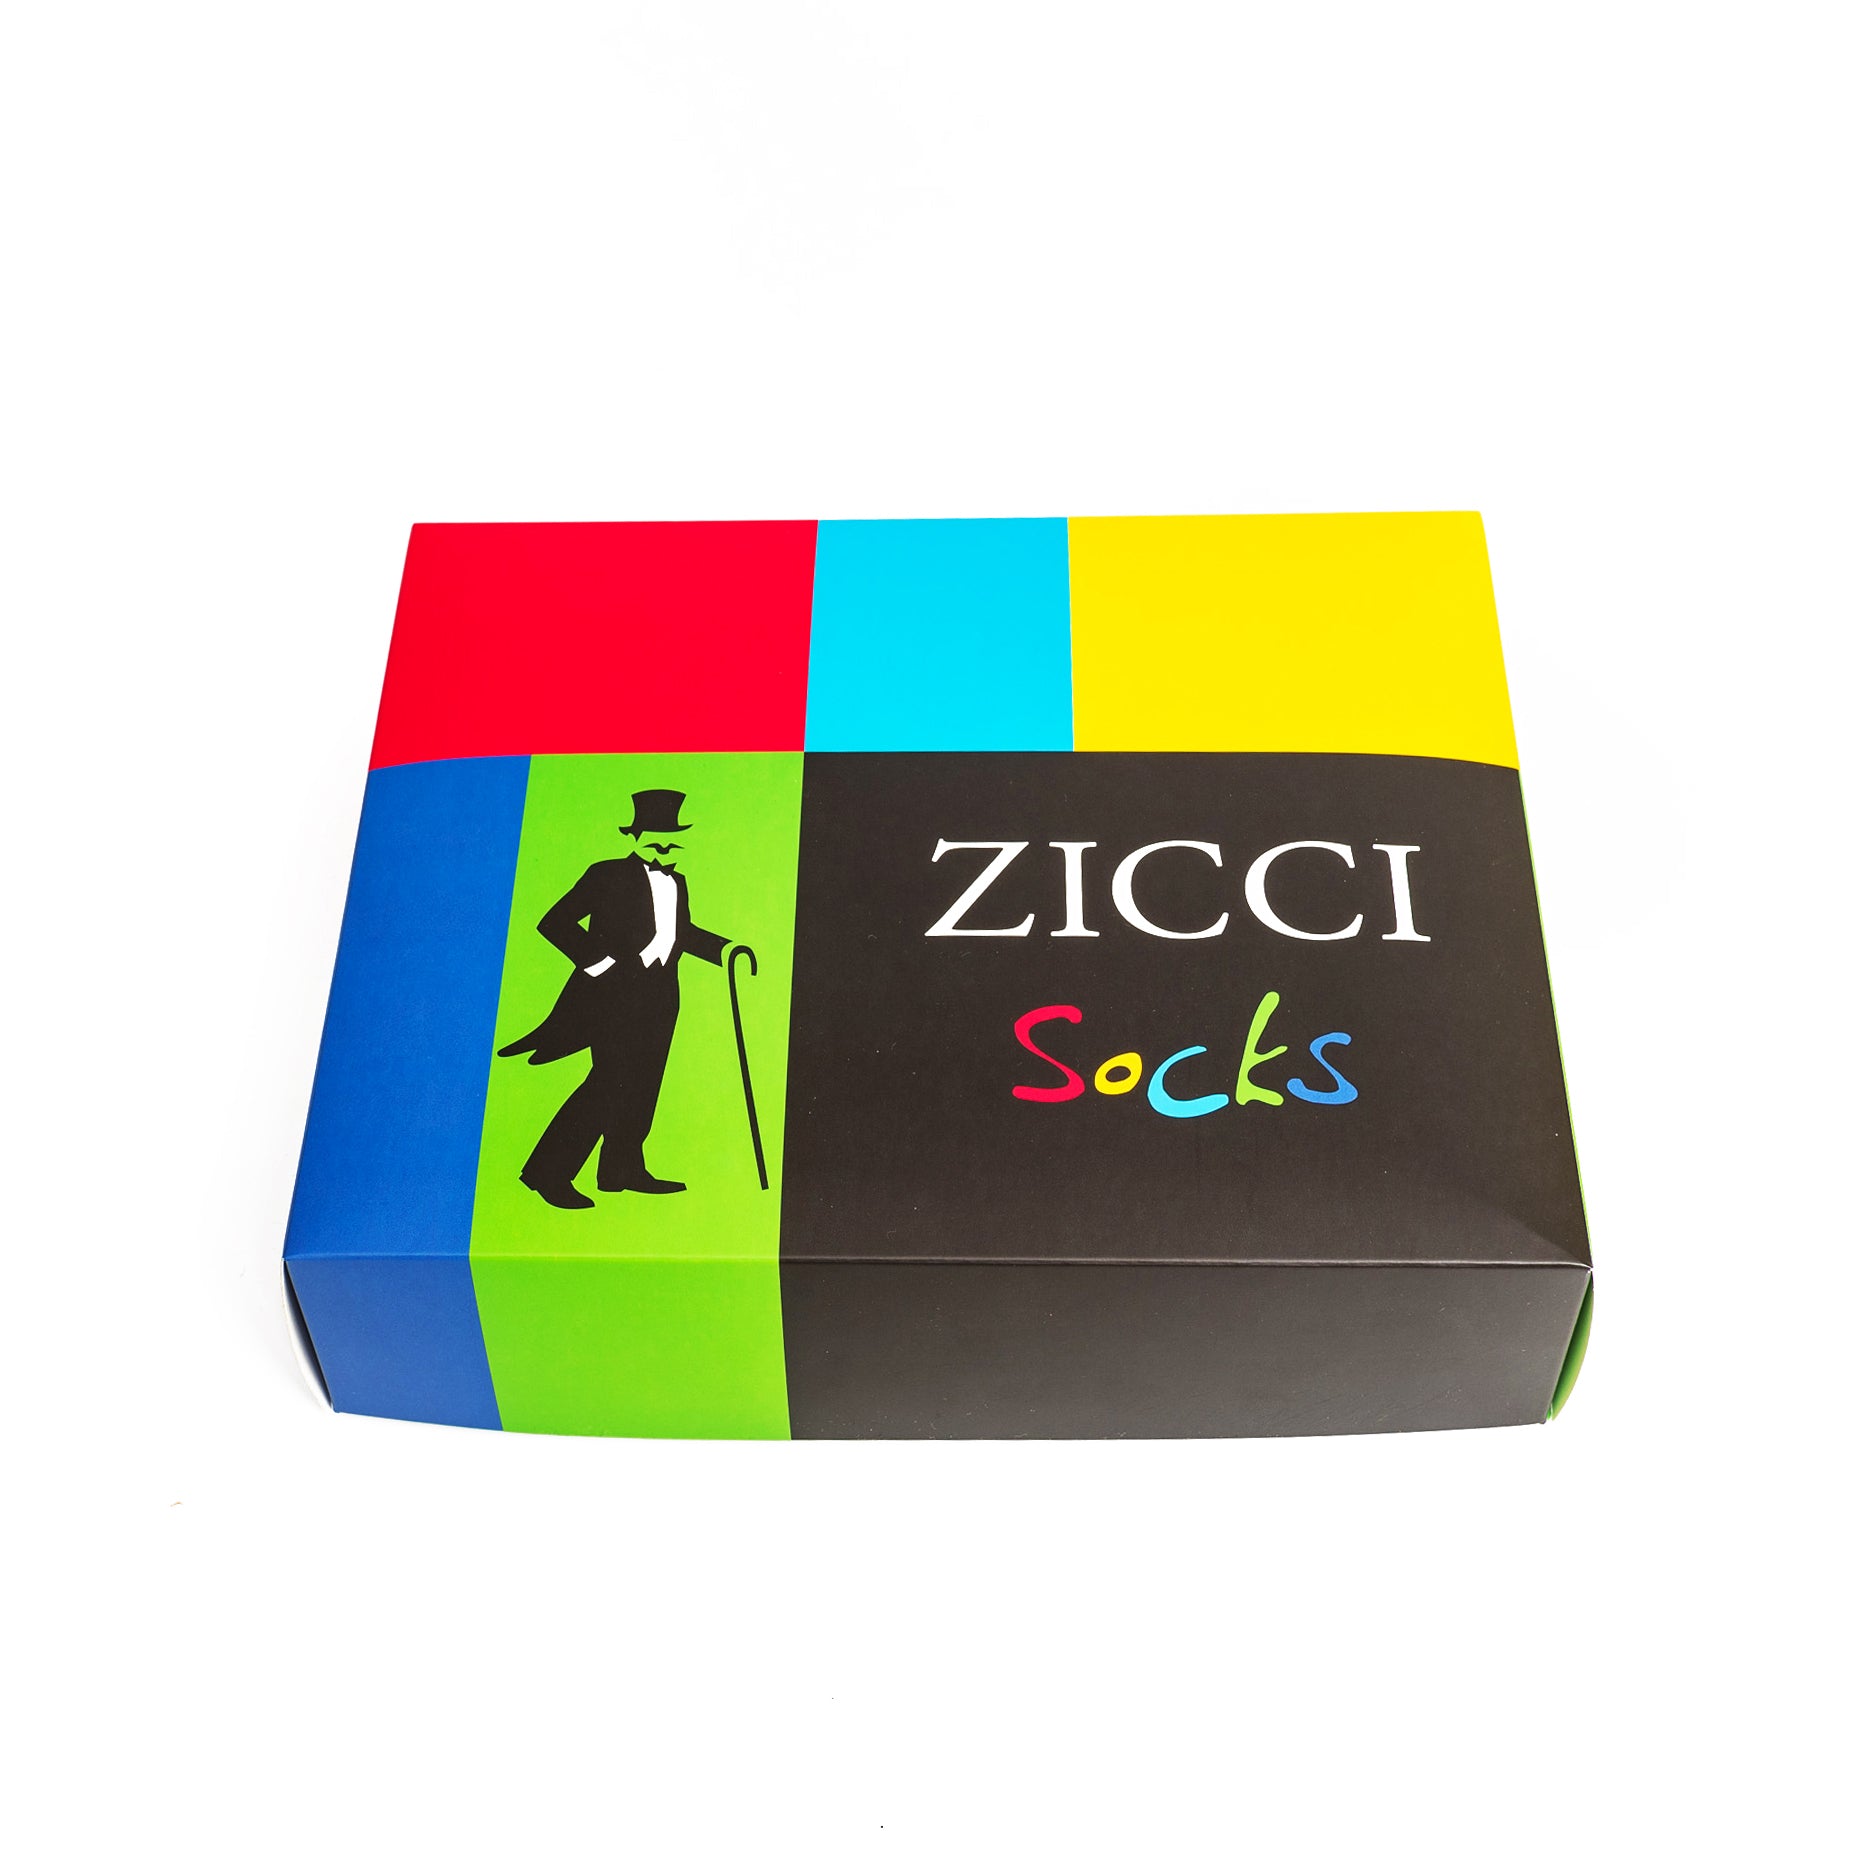 Zicci Socks Gift Box inside